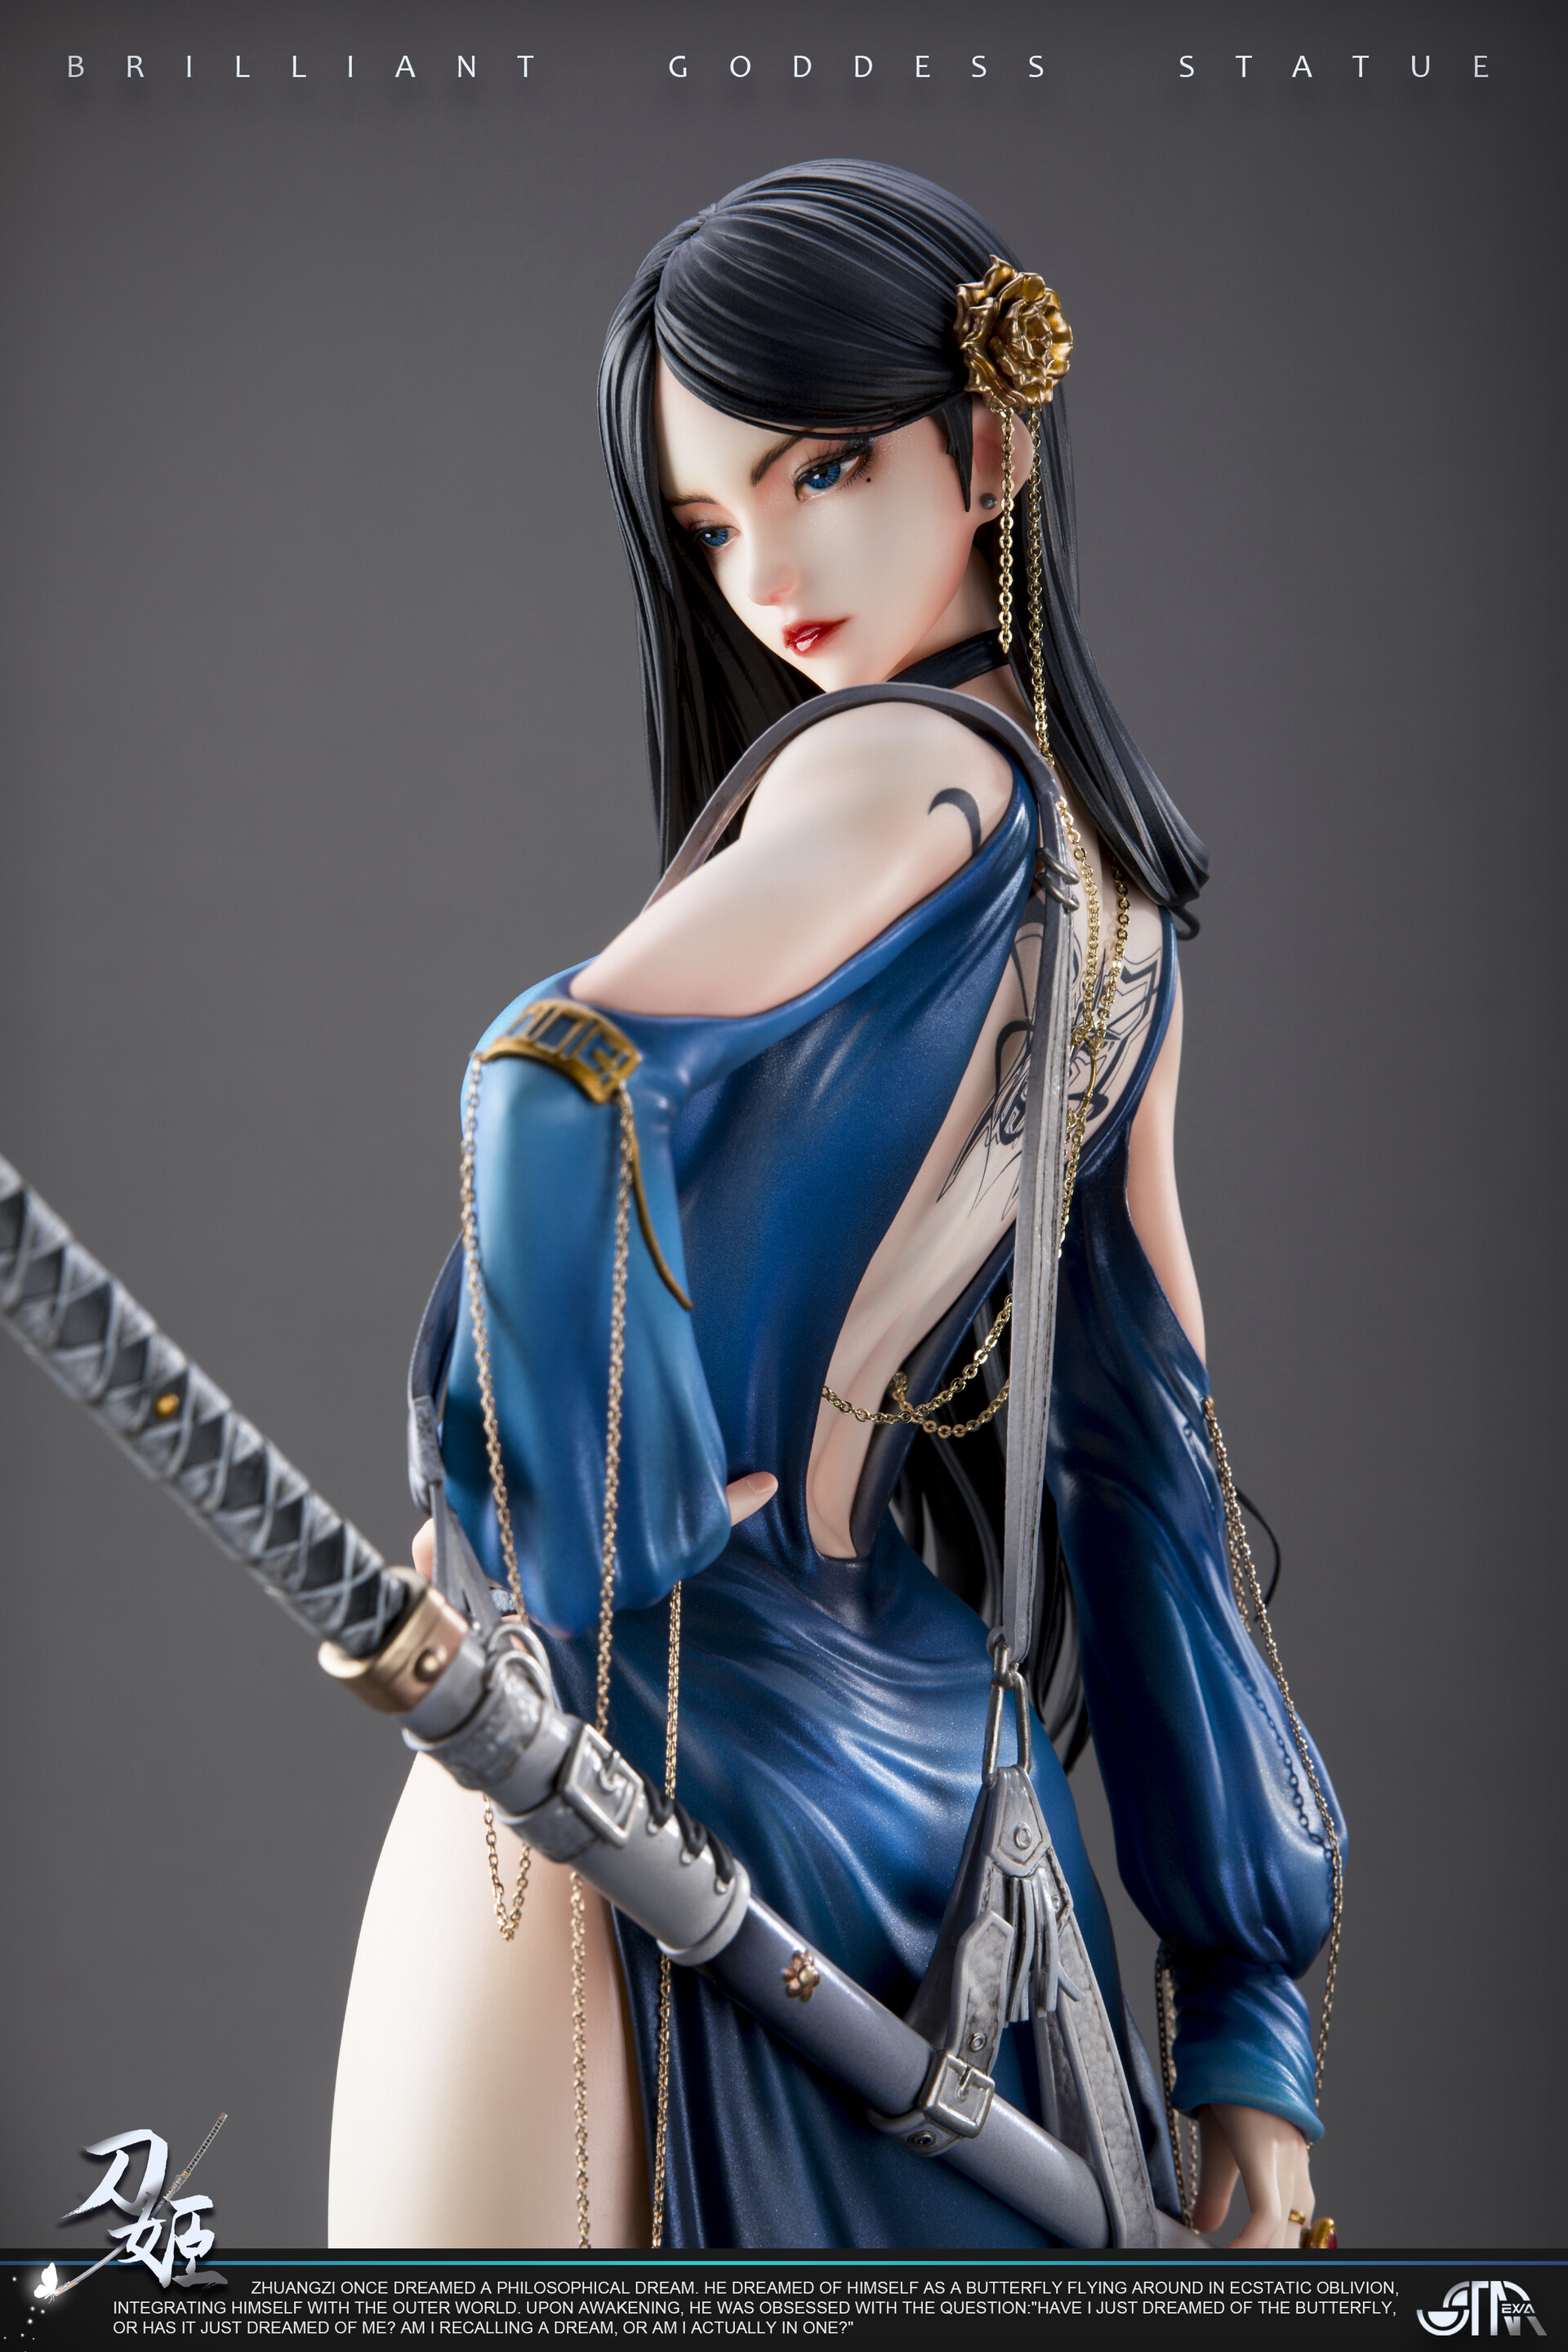 Artwork Fantasy Art Fantasy Girl Black Hair Long Hair Girl With Weapon Asian Red Lipstick Blue Dress 1920x2880